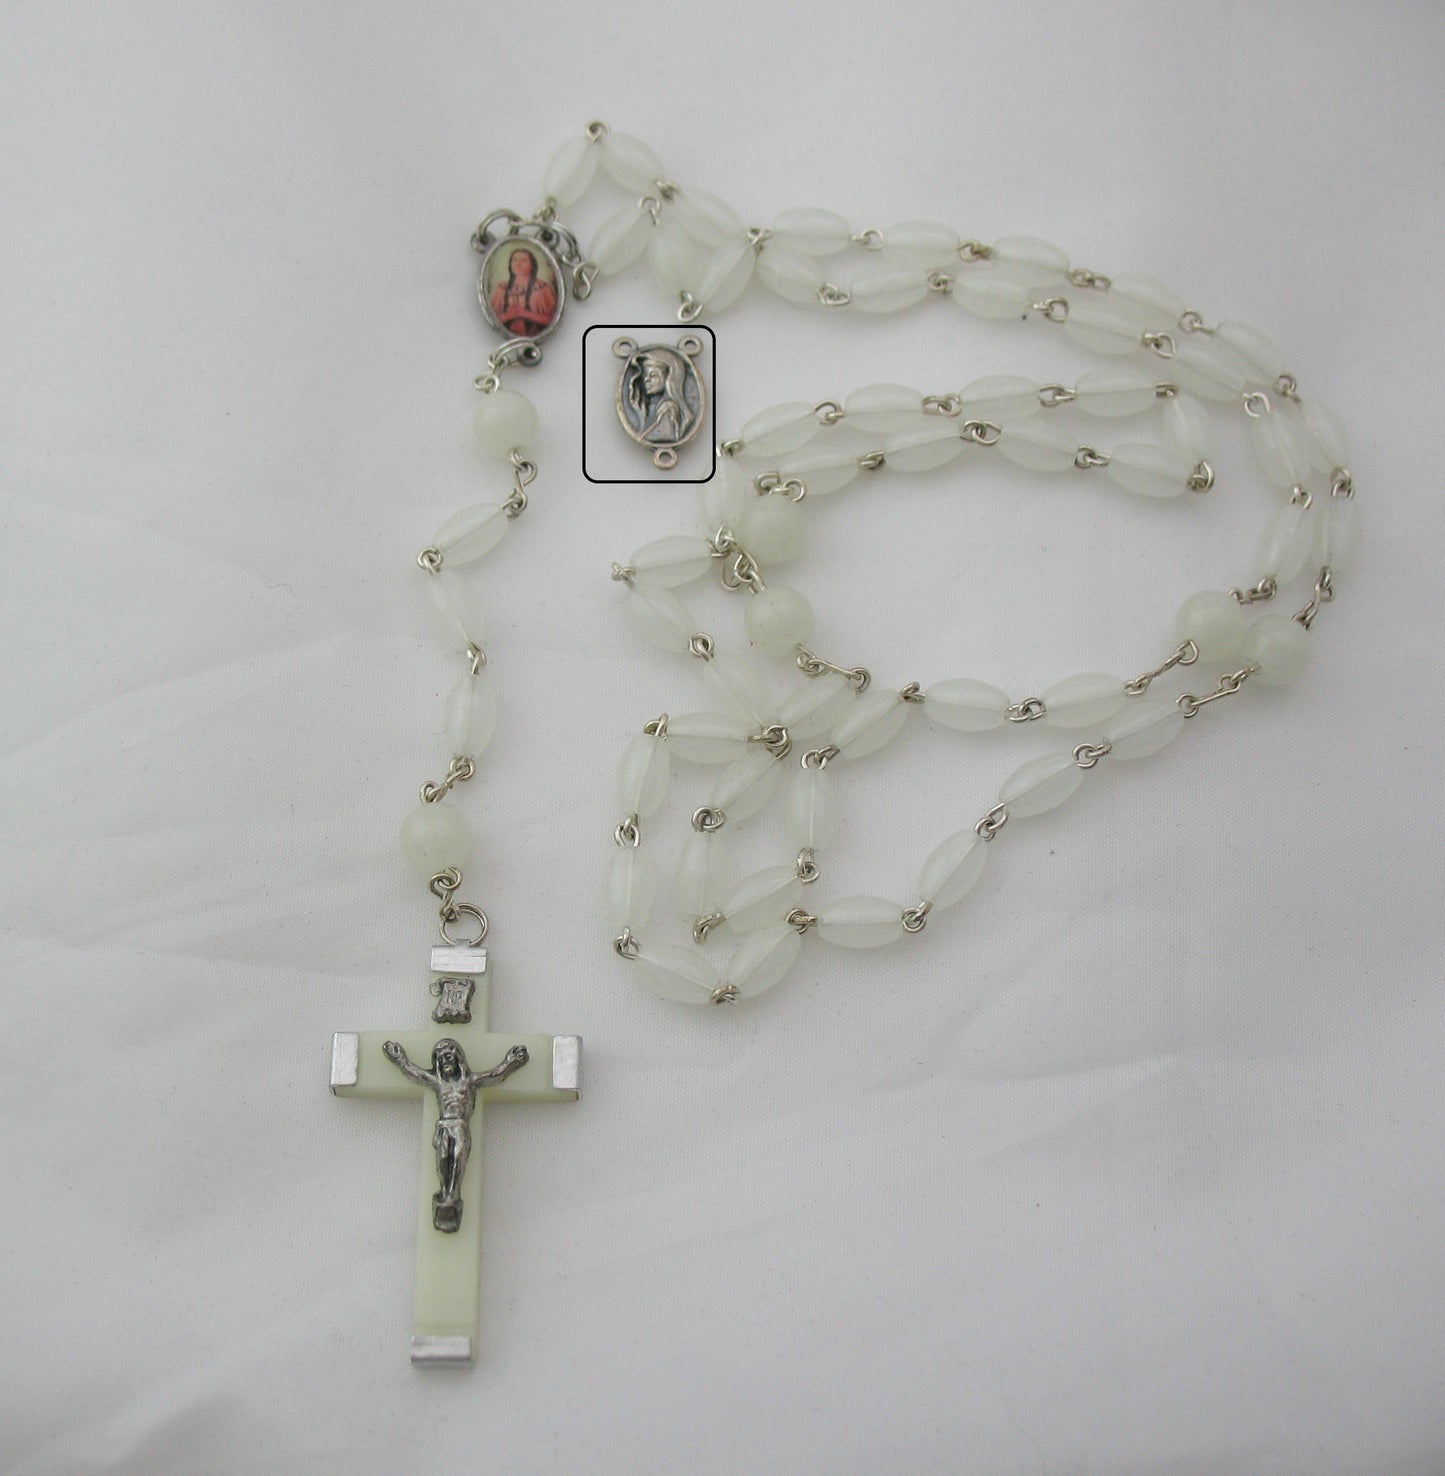 Rosary - Chain with Luminous Glow-In-The-Dark Beads